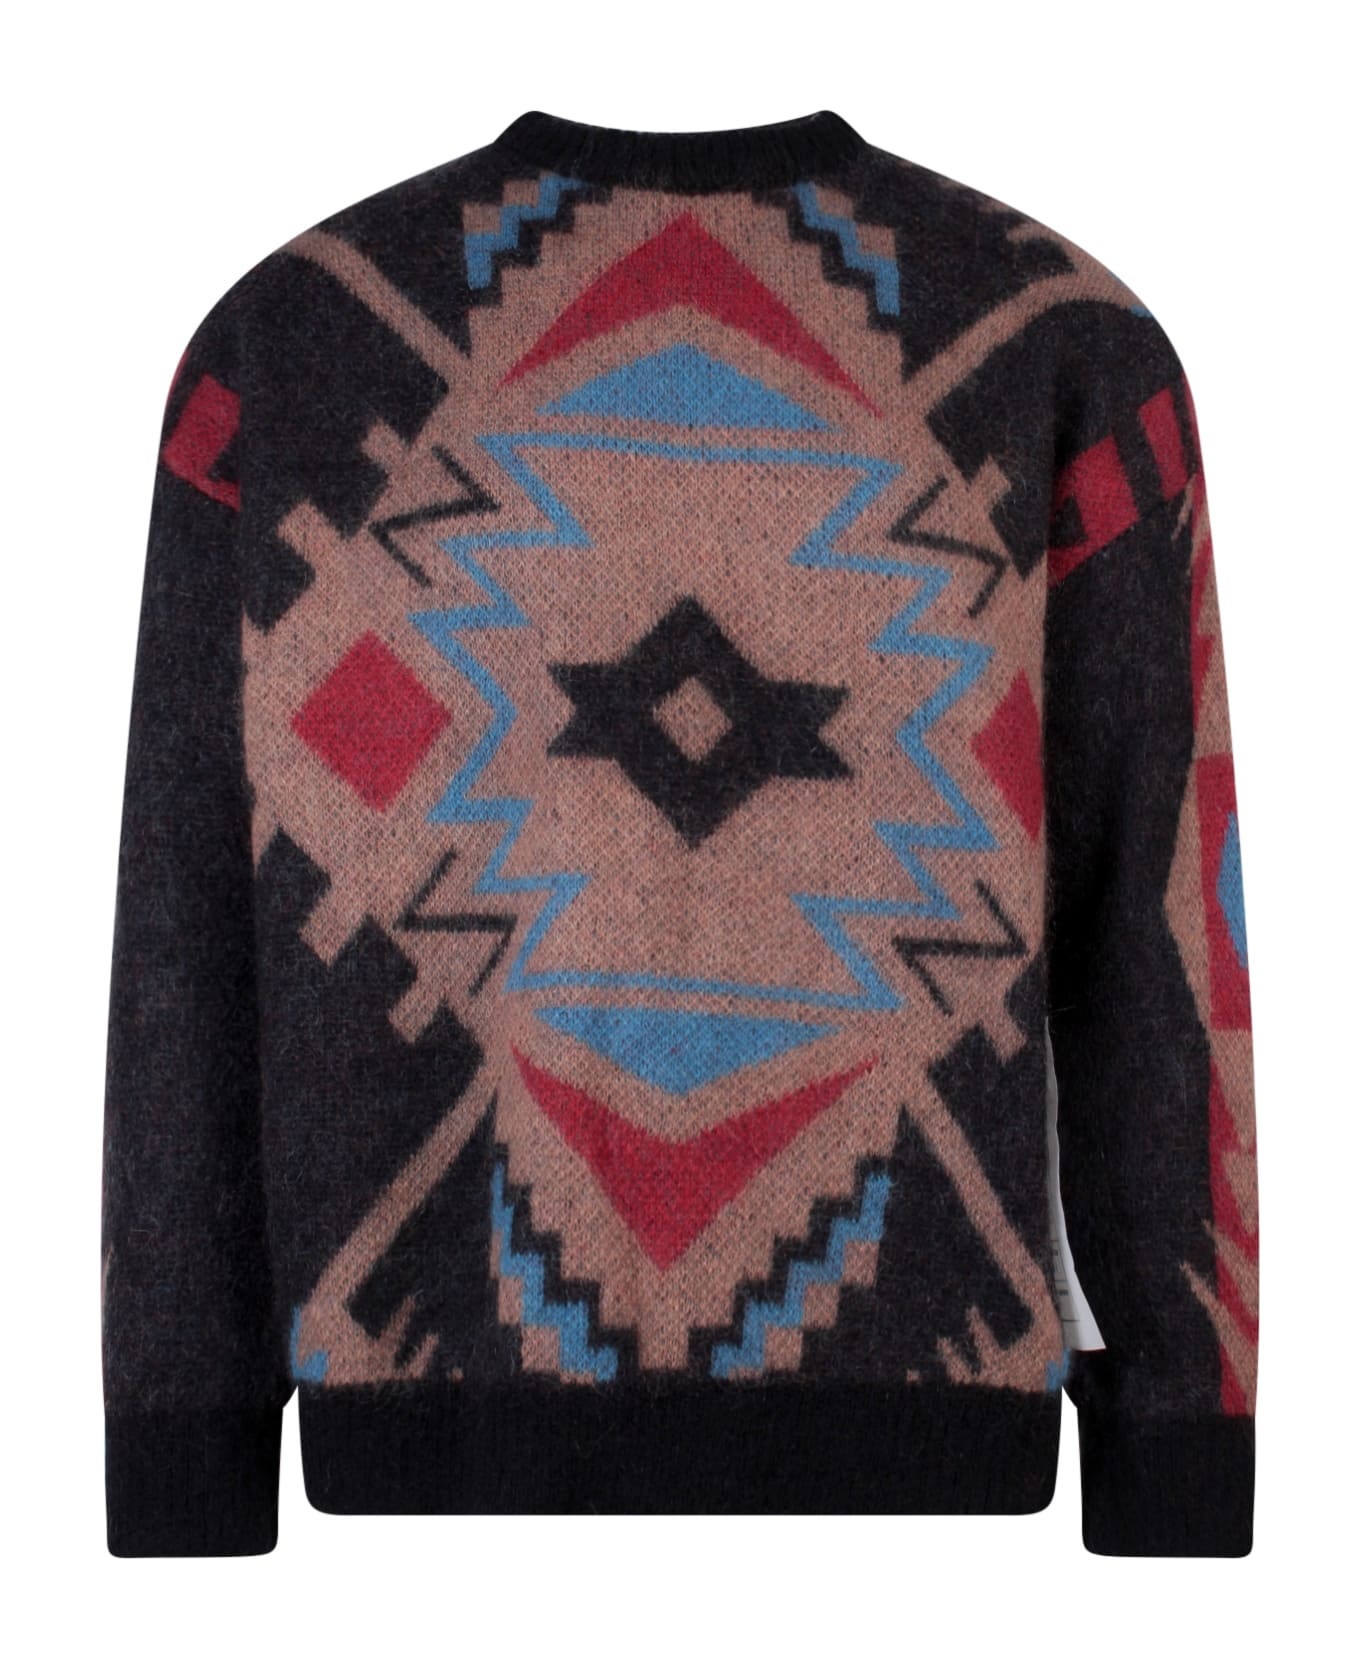 Amaranto Sweater - Brown